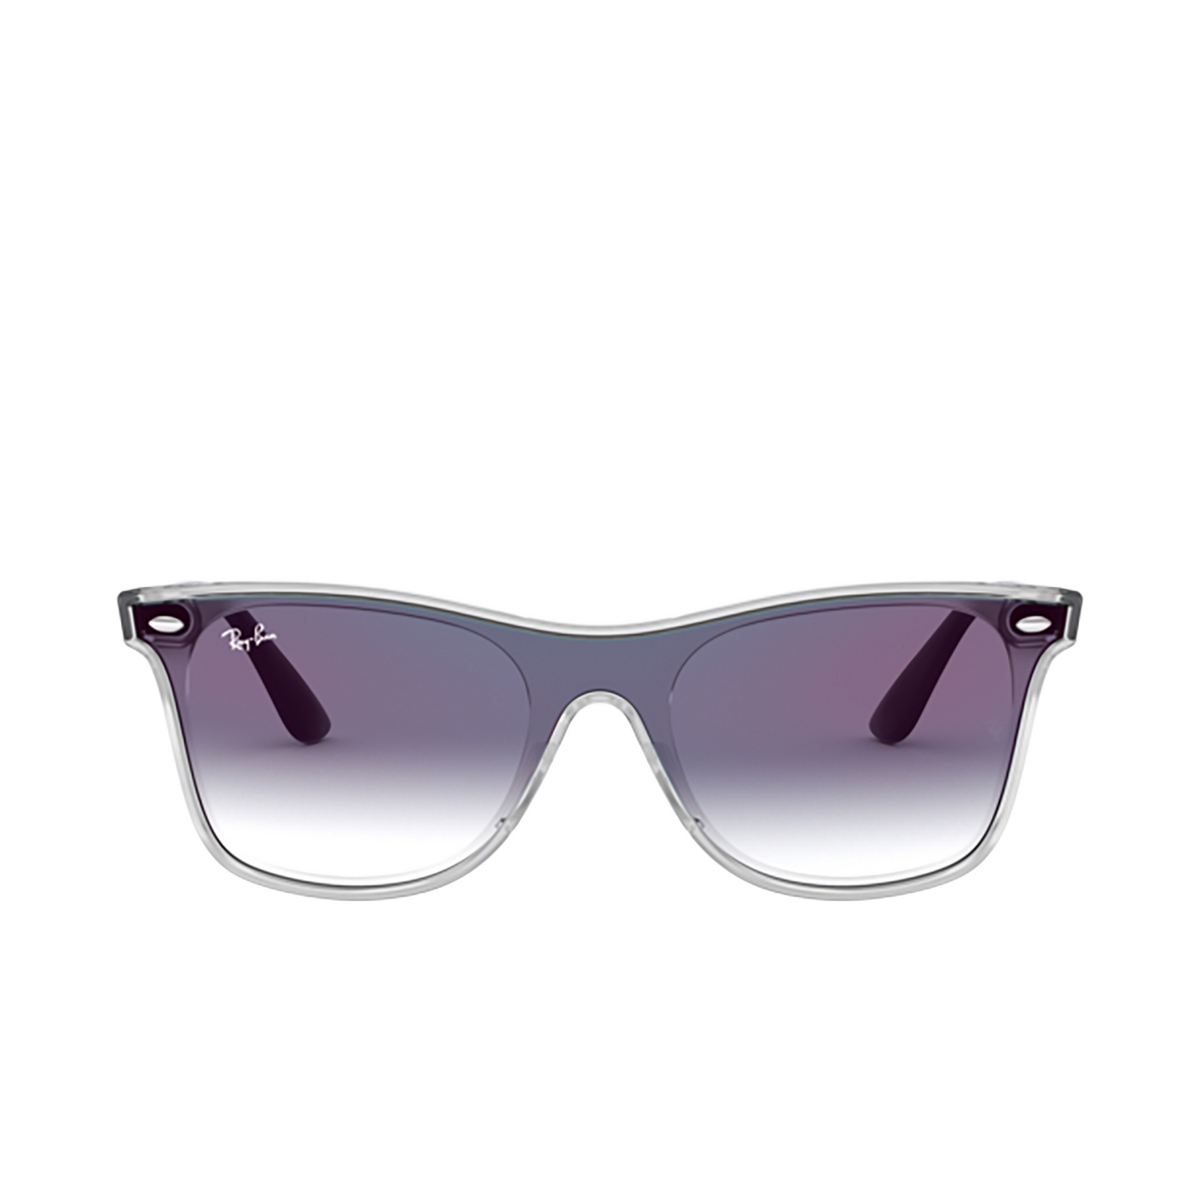 Ray-Ban® Square Sunglasses: Blaze Wayfarer RB4440N color Matte Trasparent 6356X0 - 1/3.